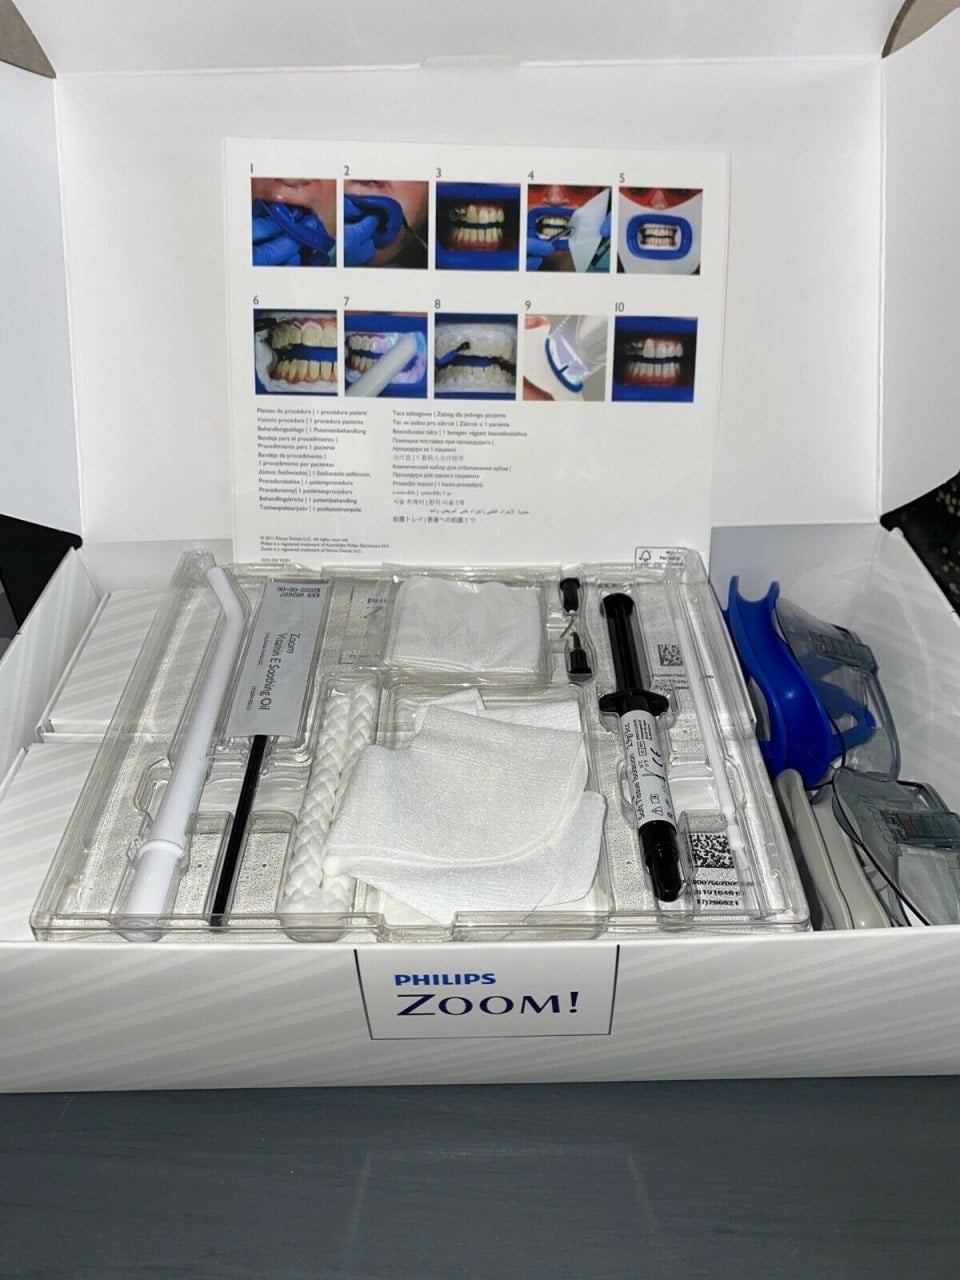 Philips Zoom 2 patients chairside kit inside open box